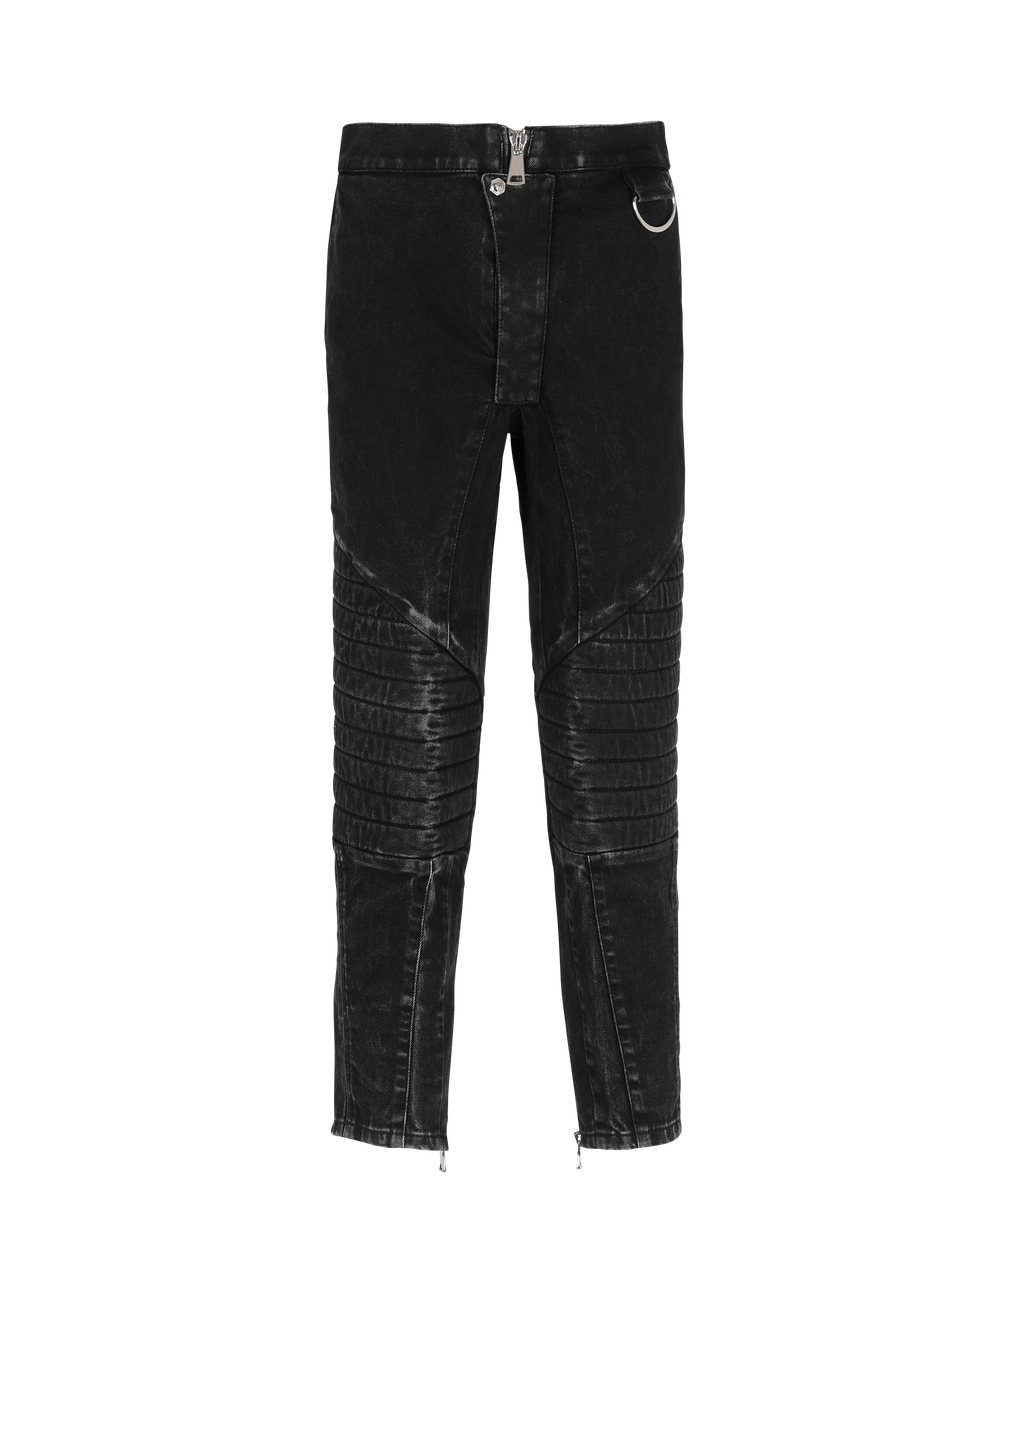 Ribbed cotton slim-fit jeans, black, hi-res